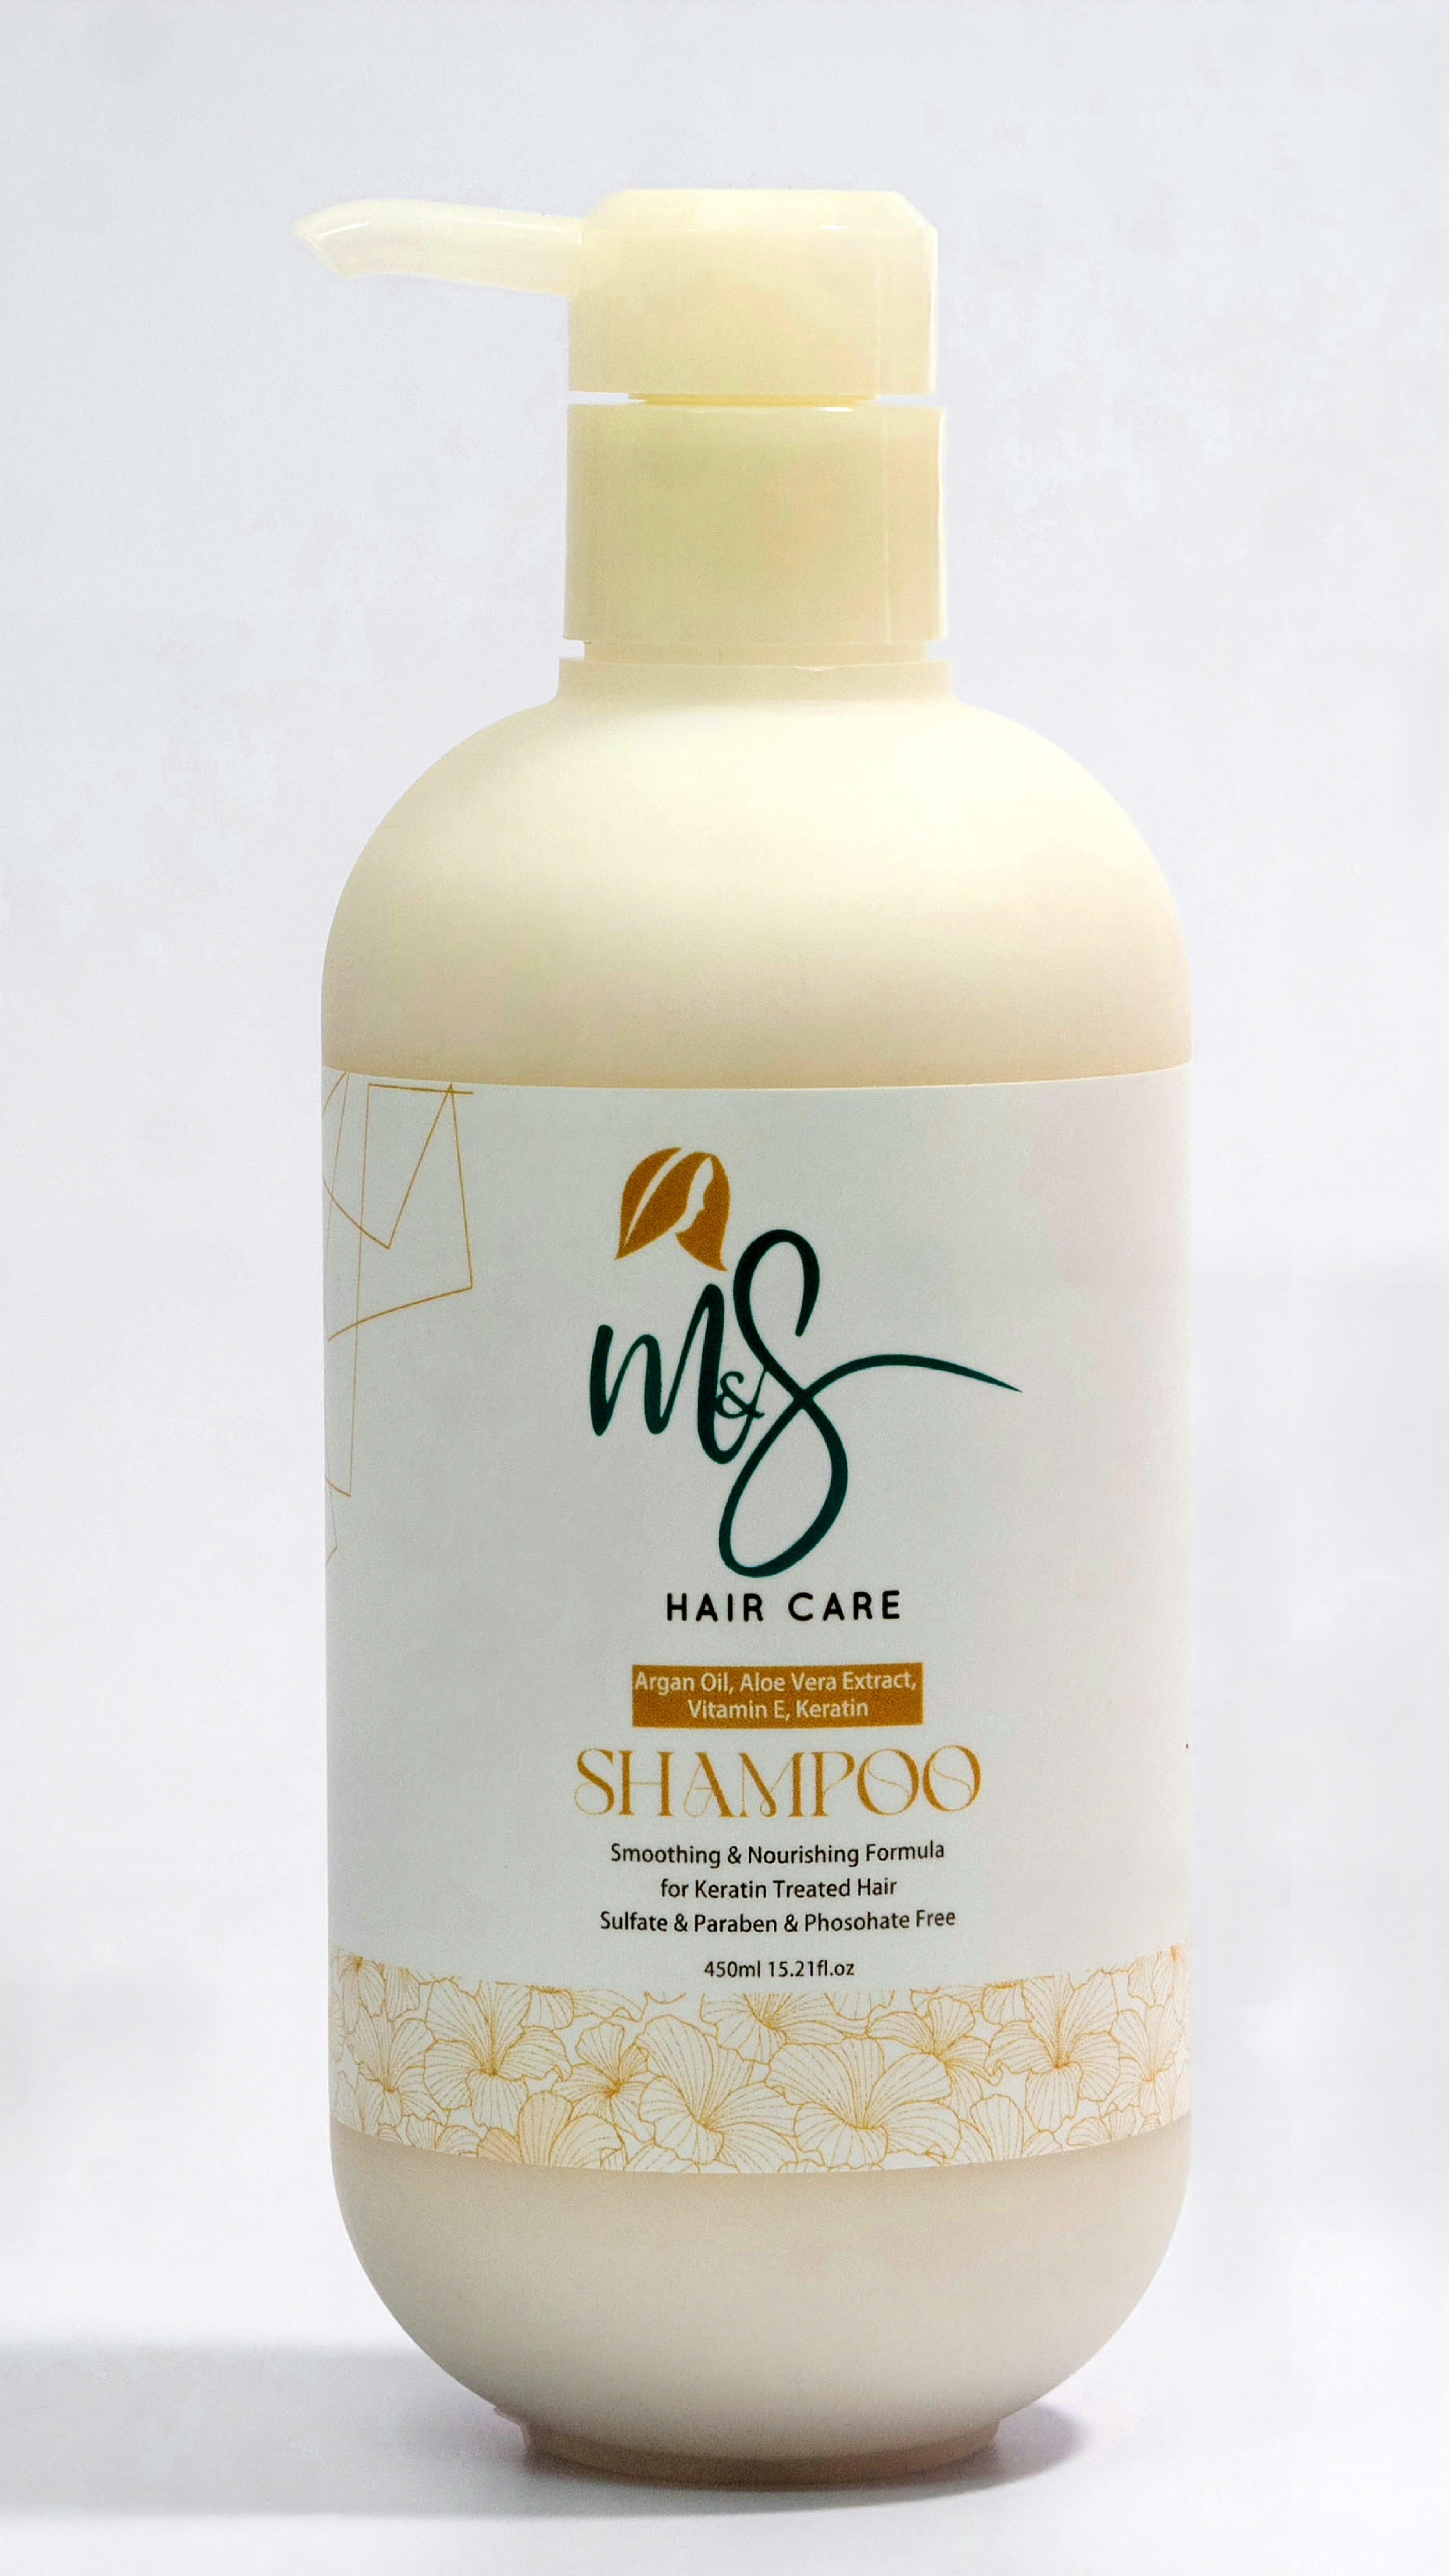 M&s shampoo sulfate, paraben free